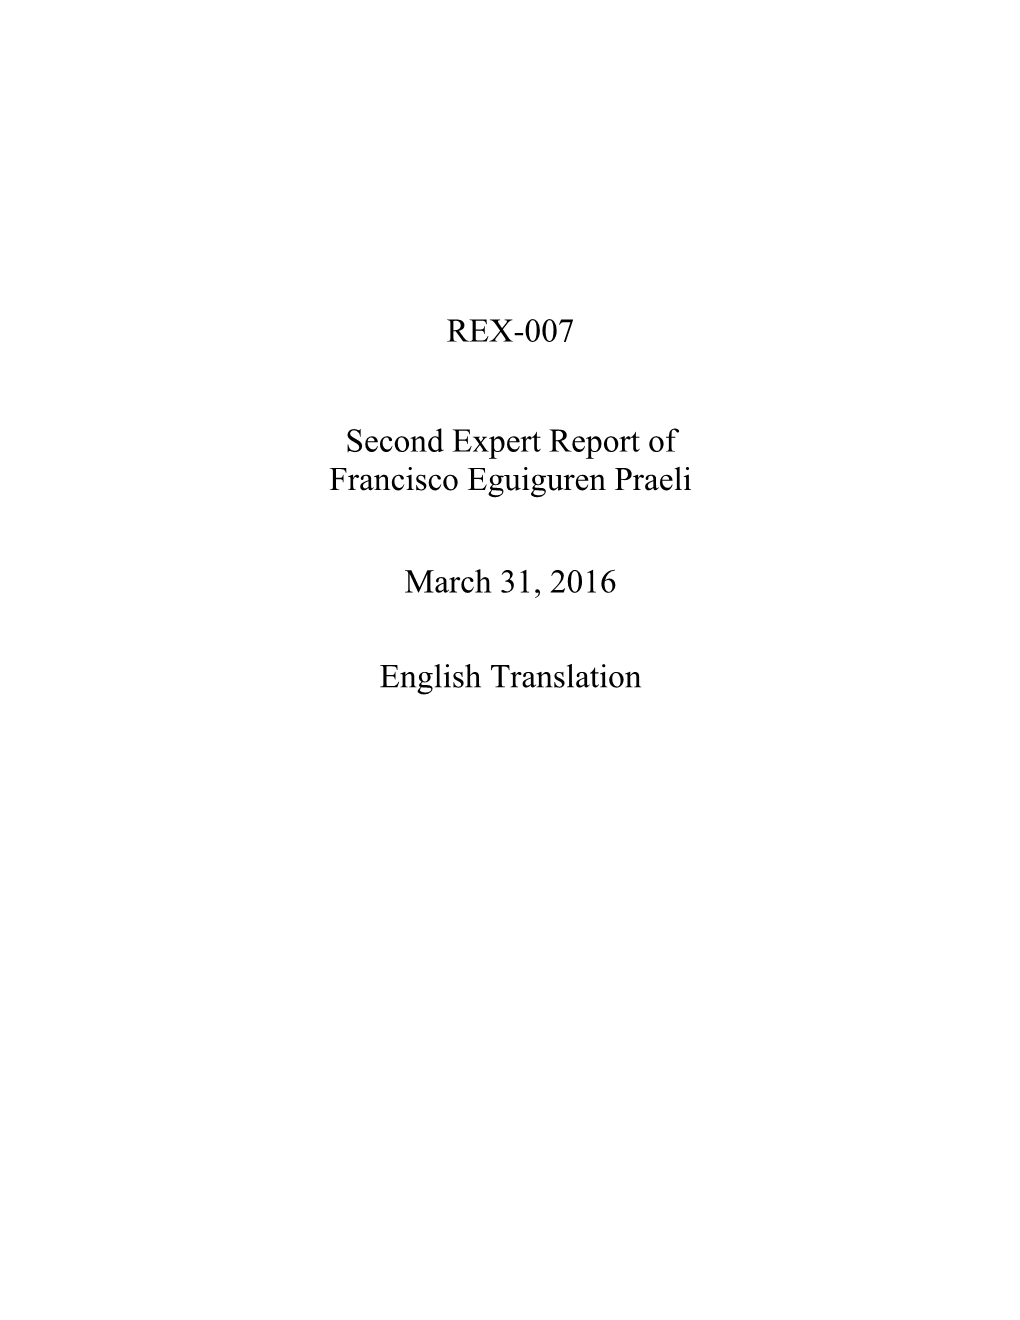 REX-007 Second Expert Report of Francisco Eguiguren Praeli March